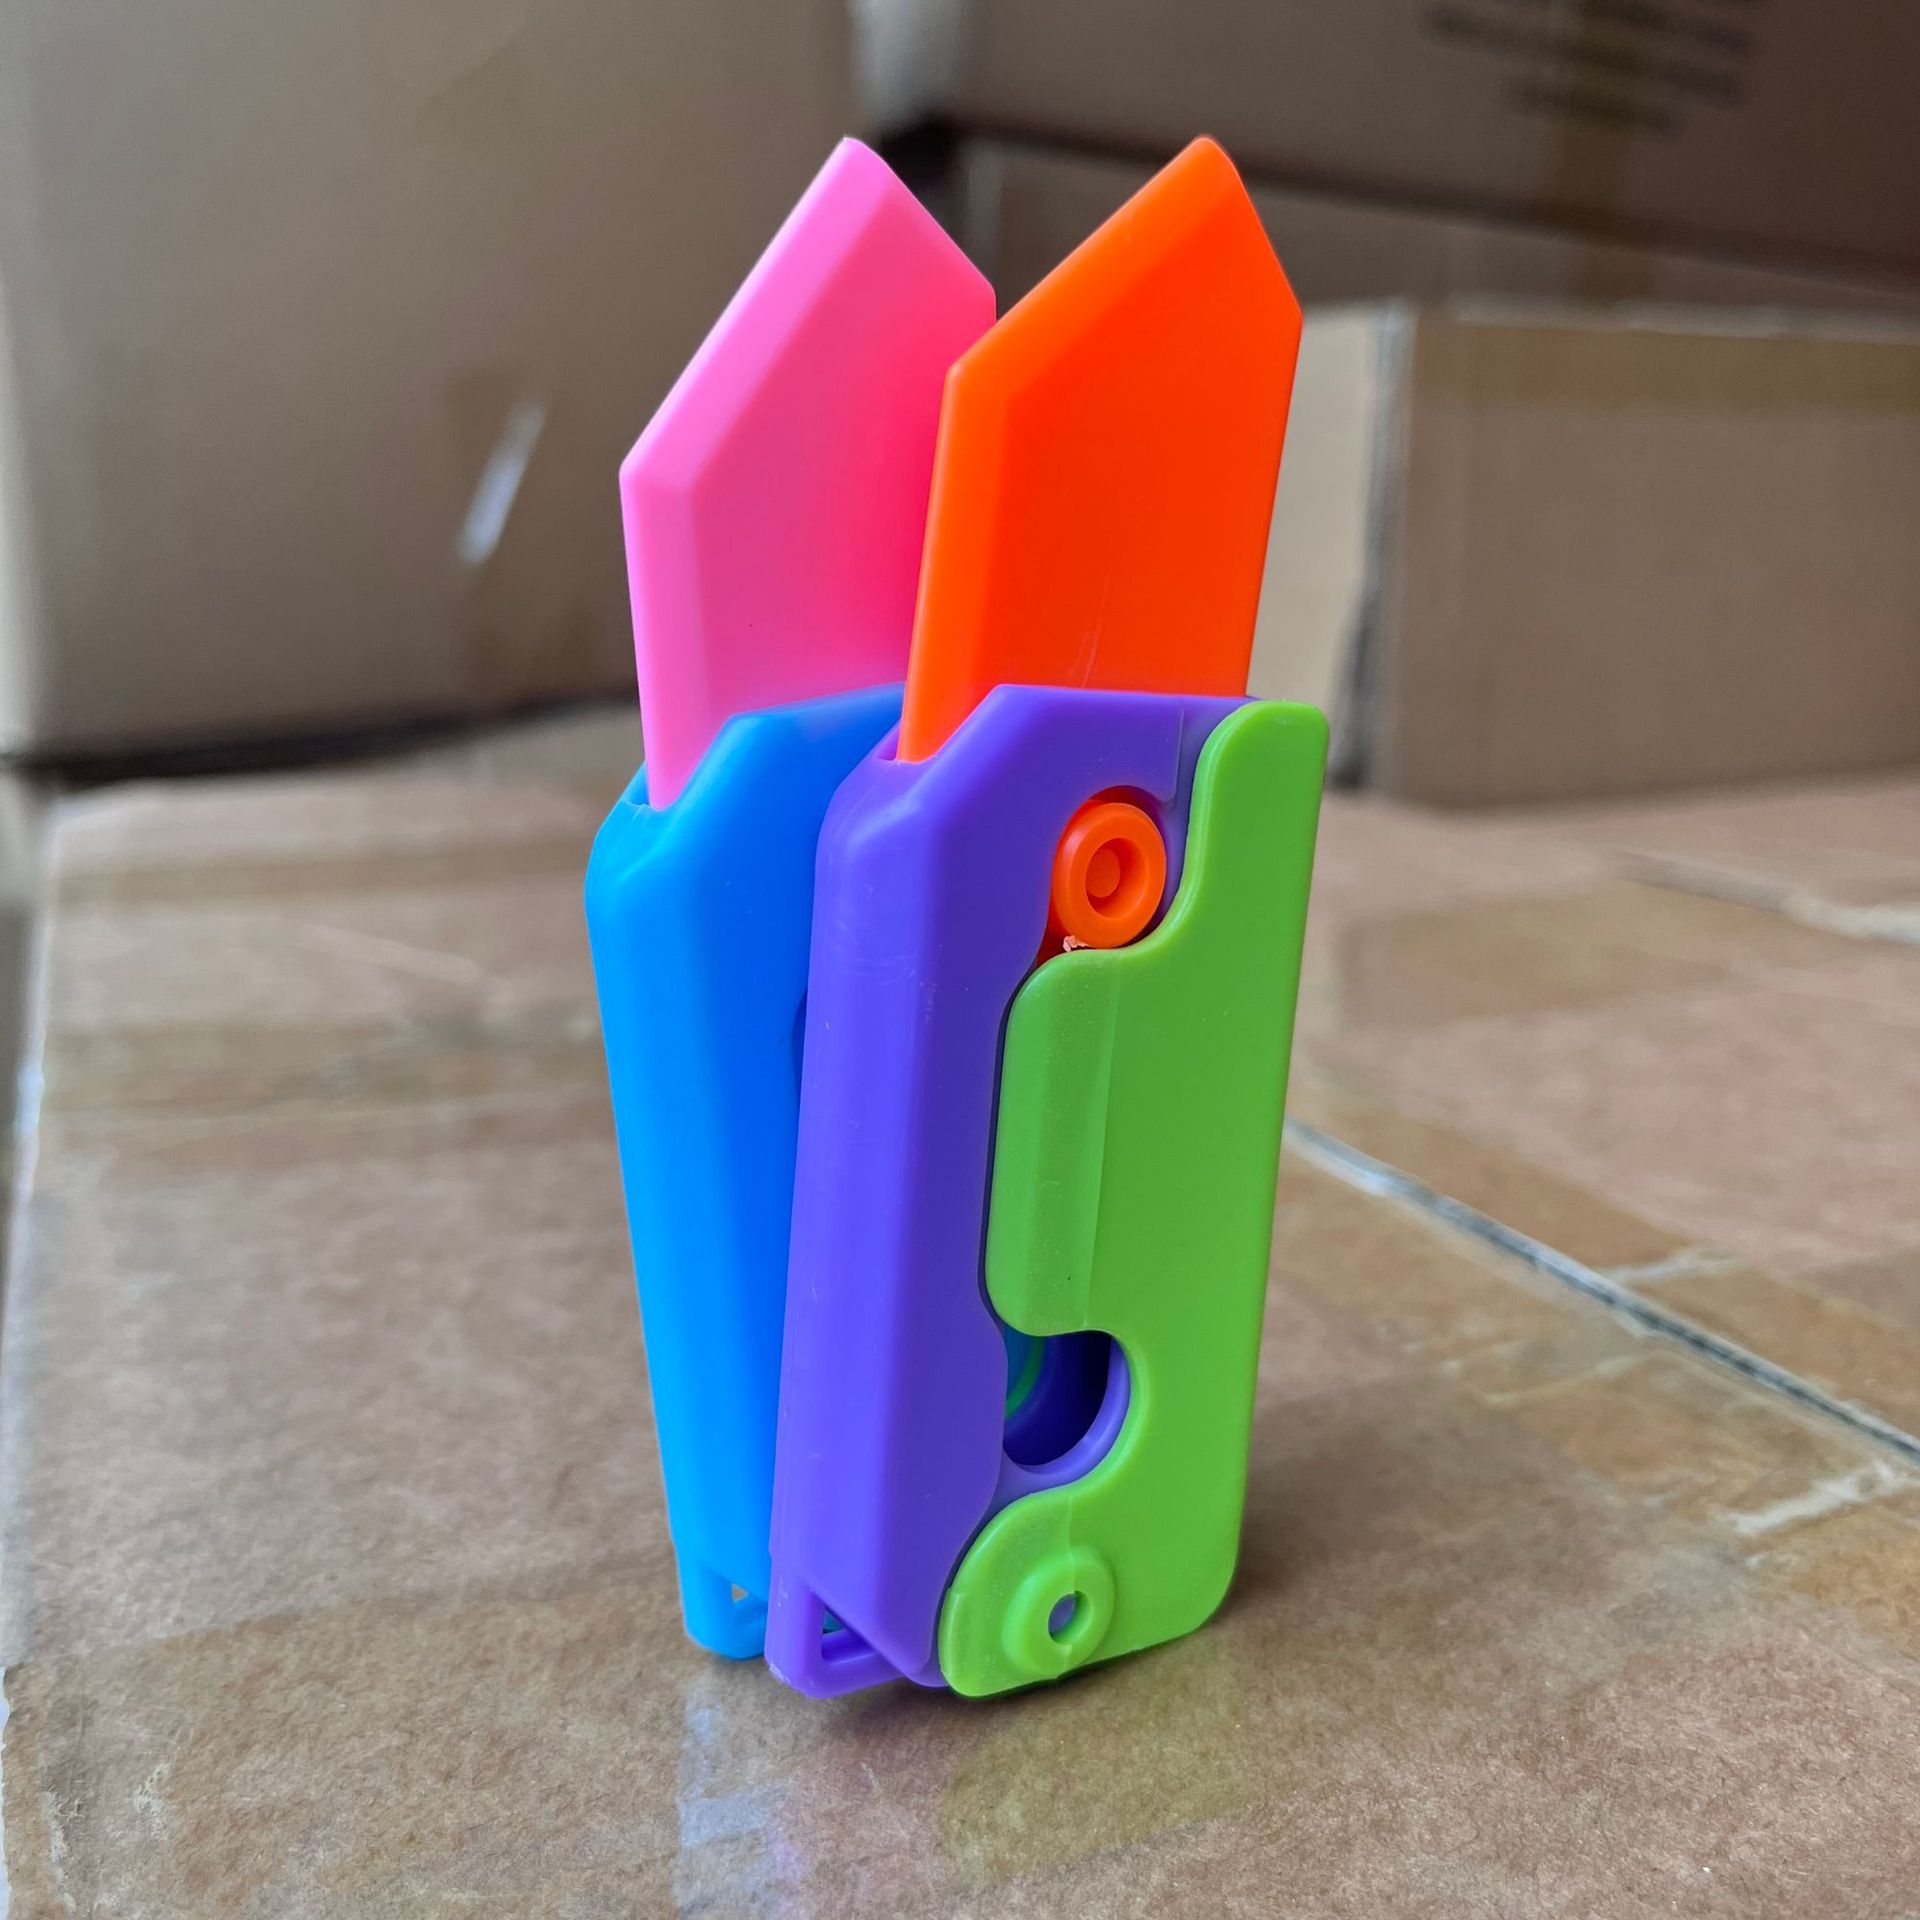 Douyin Same Style Radish Knife 3D Gravity Knife Decompression Push Card Small Toy Vent Fun Gravity Radish Knife Wholesale